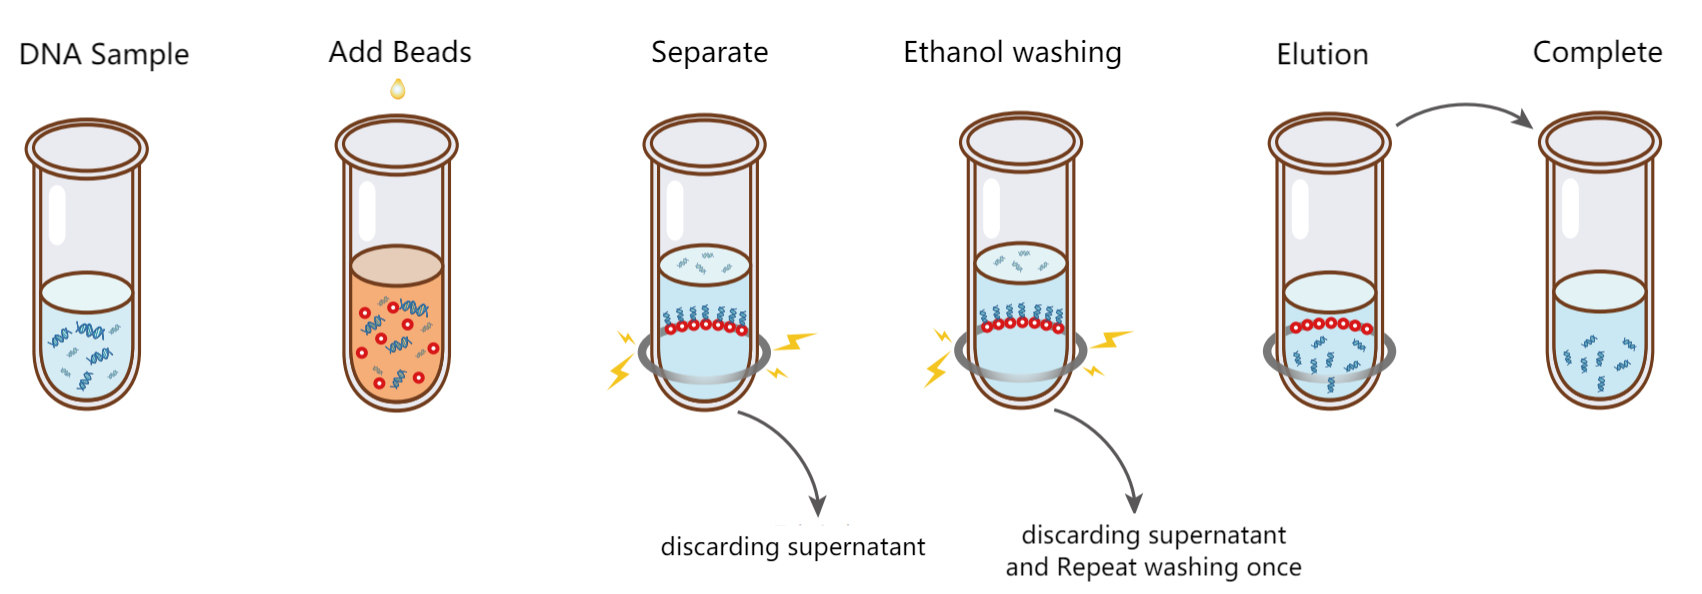 DNA purification steps